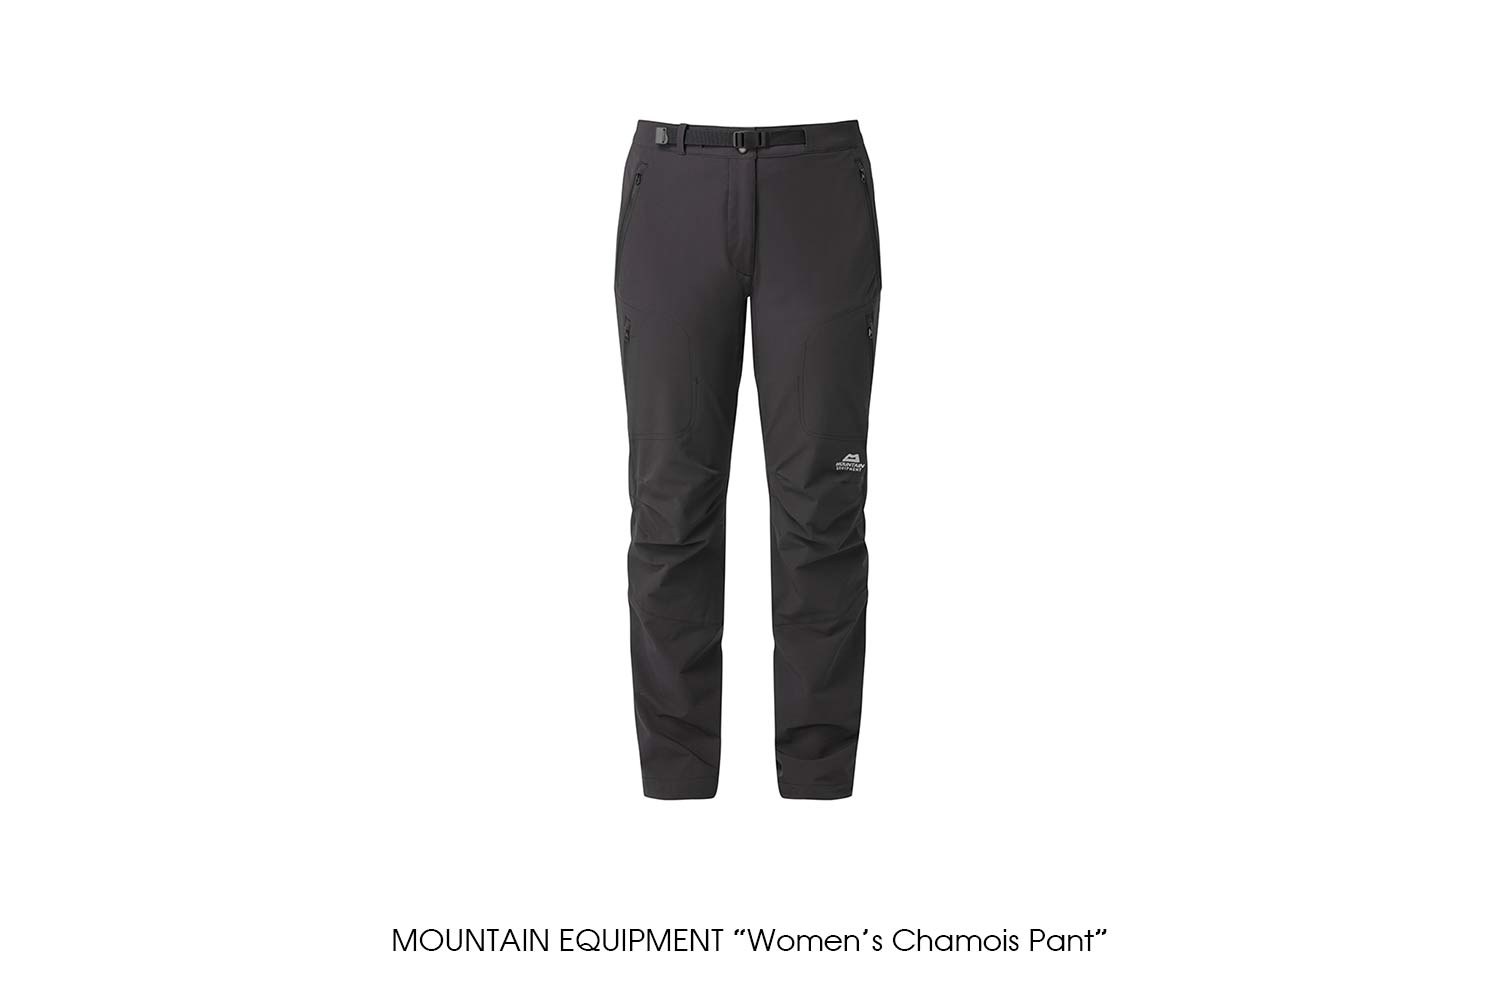 MOUNTAIN EQUIPMENT "Women's Chamois Pant"